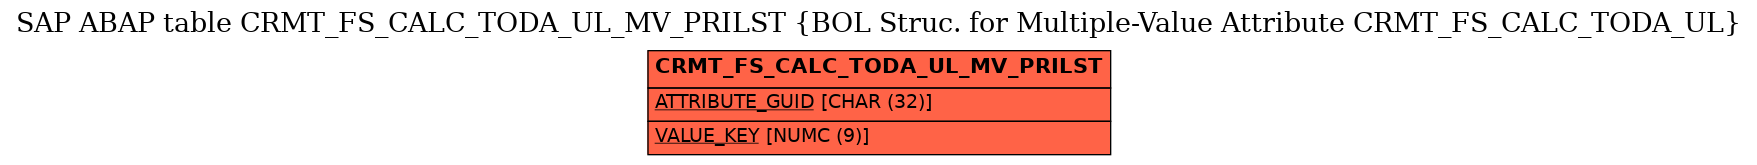 E-R Diagram for table CRMT_FS_CALC_TODA_UL_MV_PRILST (BOL Struc. for Multiple-Value Attribute CRMT_FS_CALC_TODA_UL)